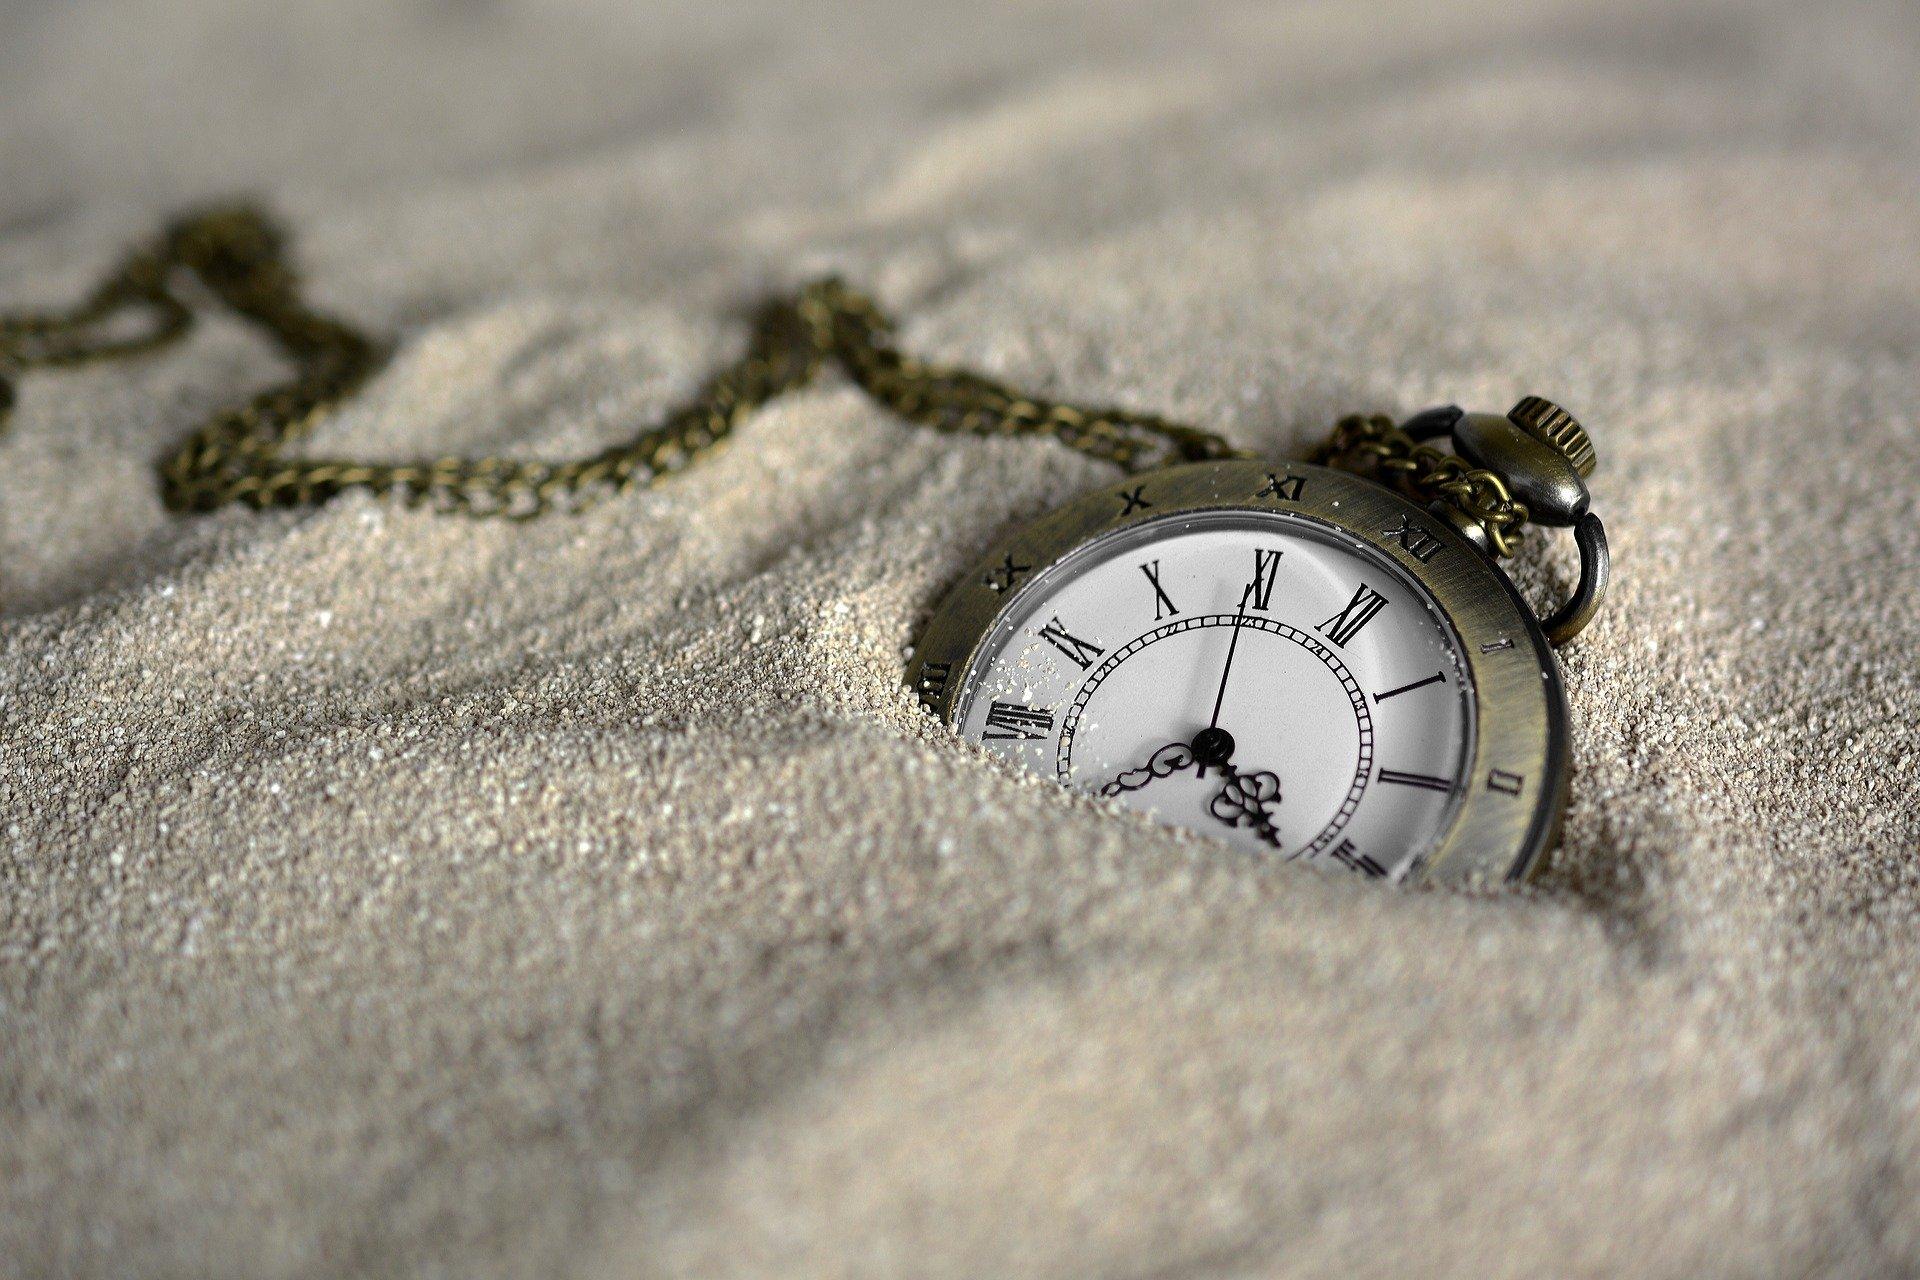 Zeit - anncapictures (pixabay)